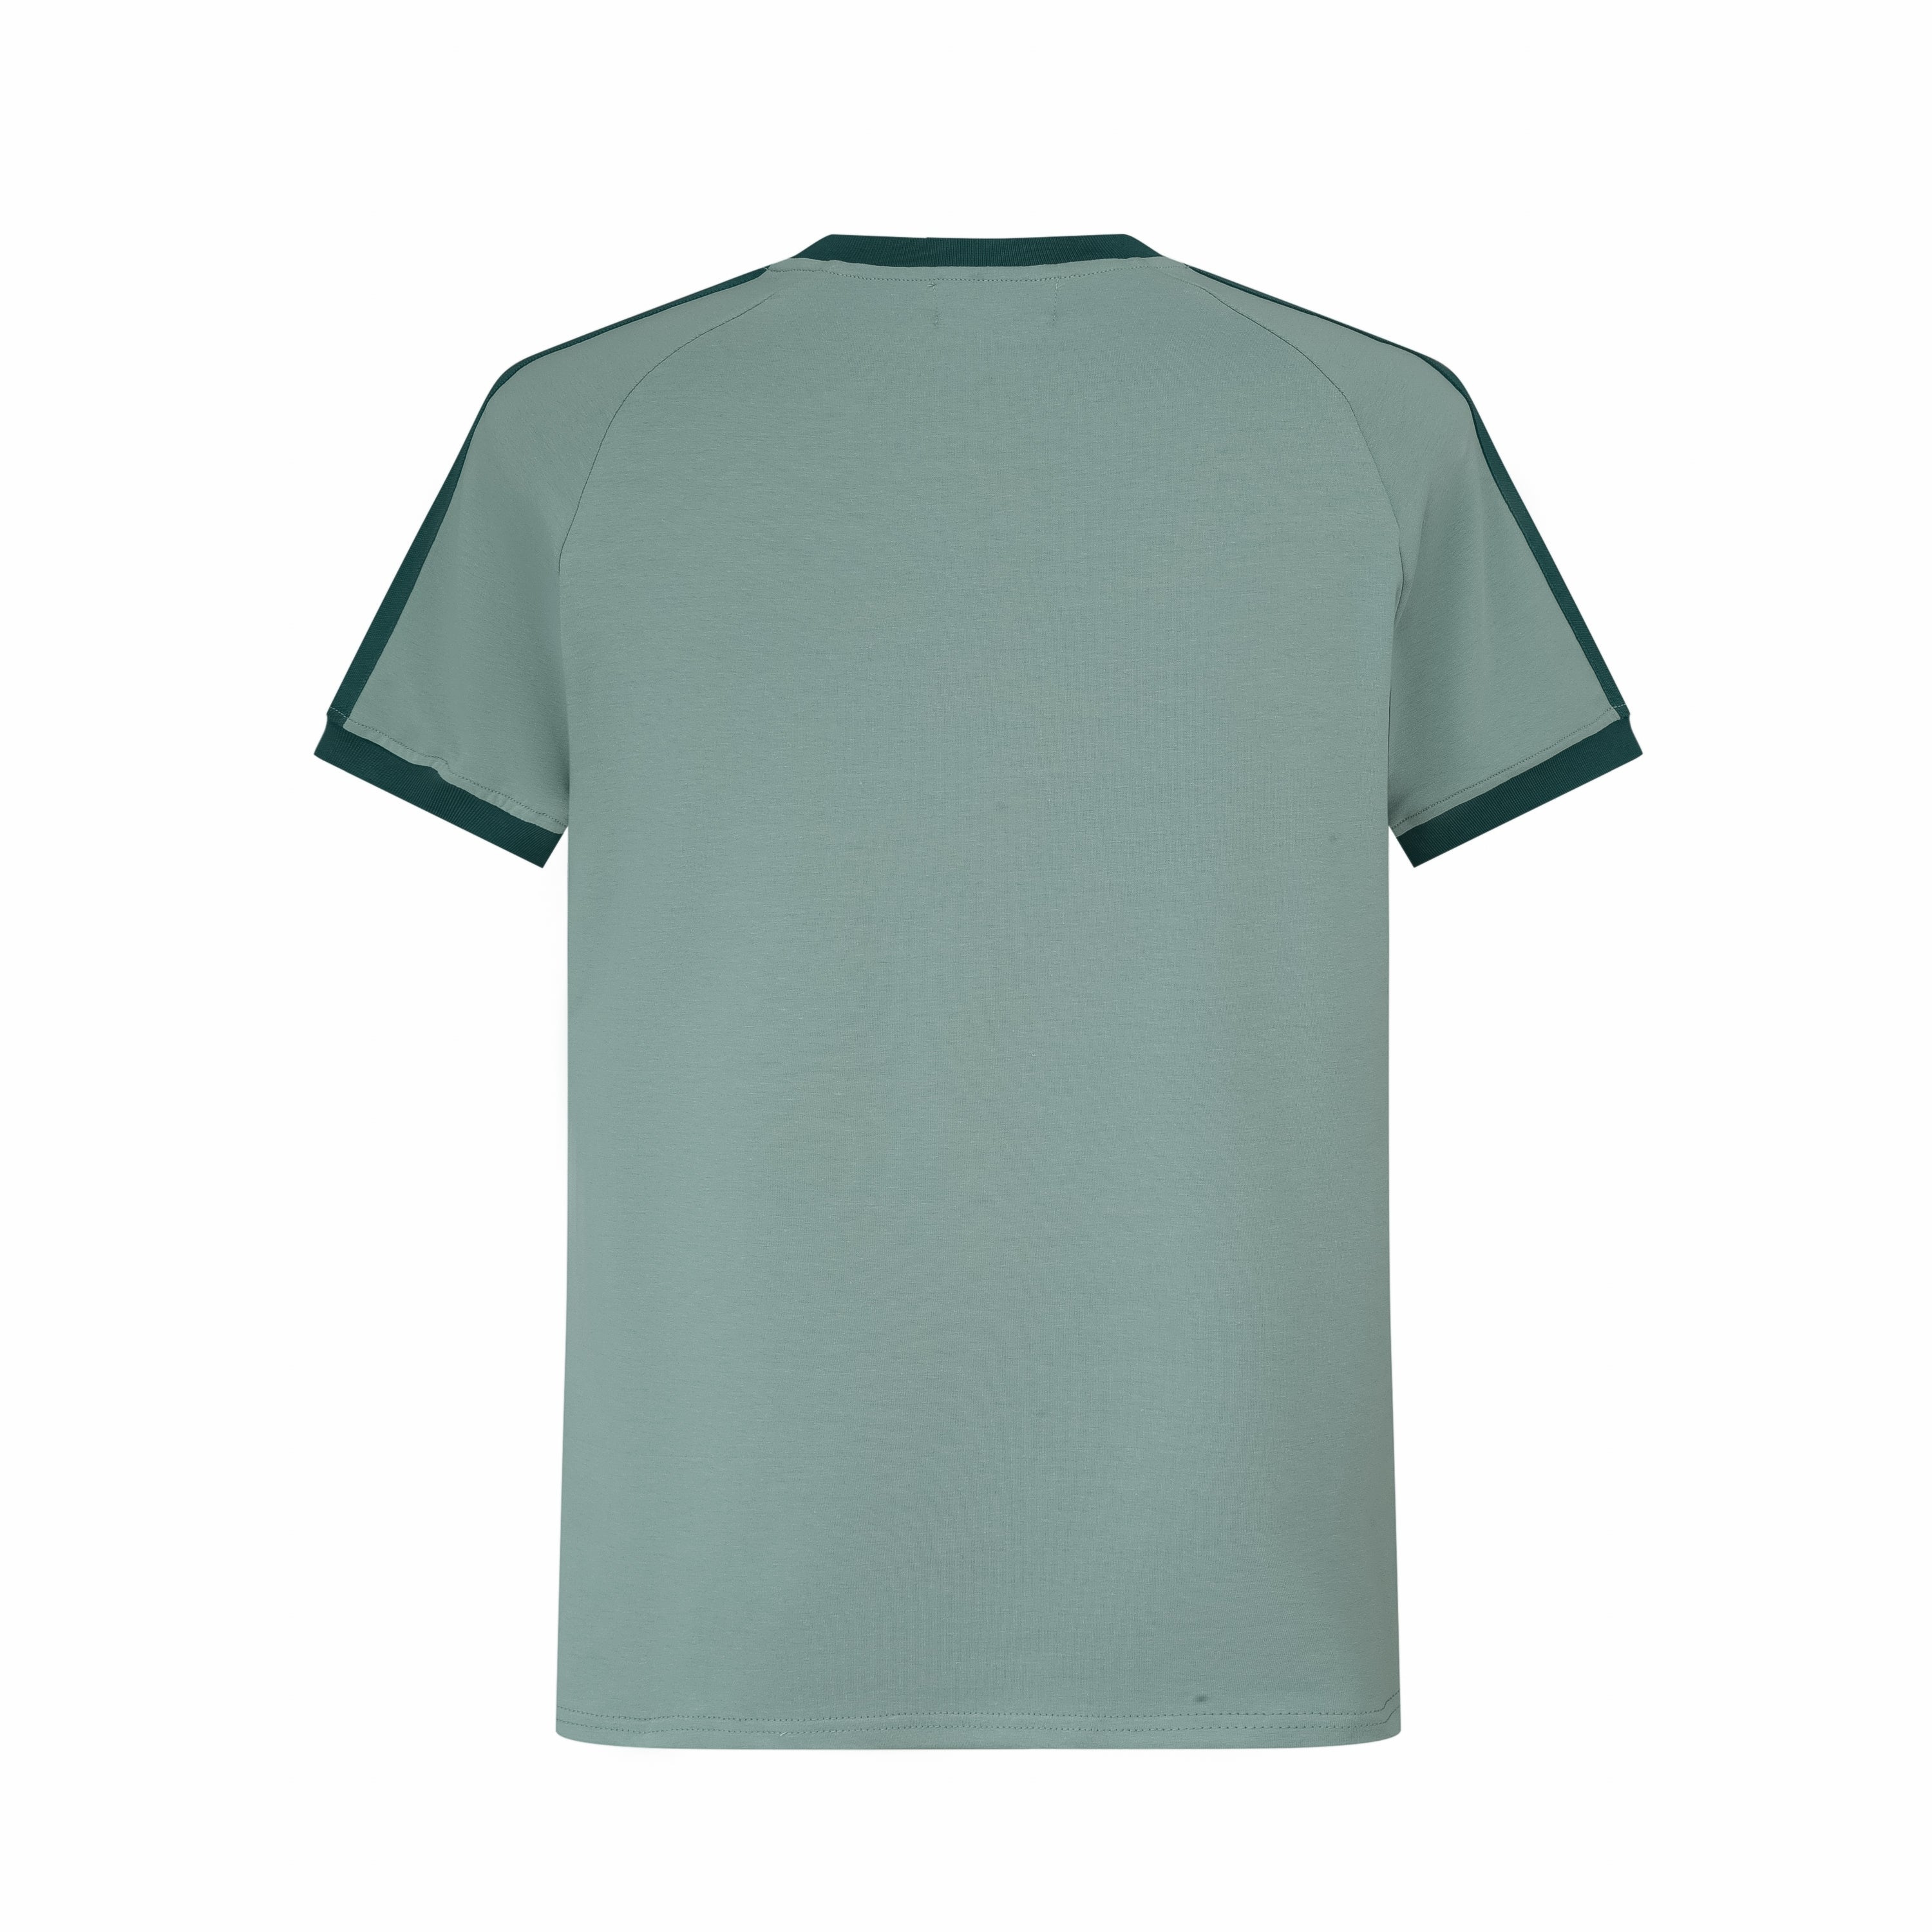 Short-sleeved t-shirt